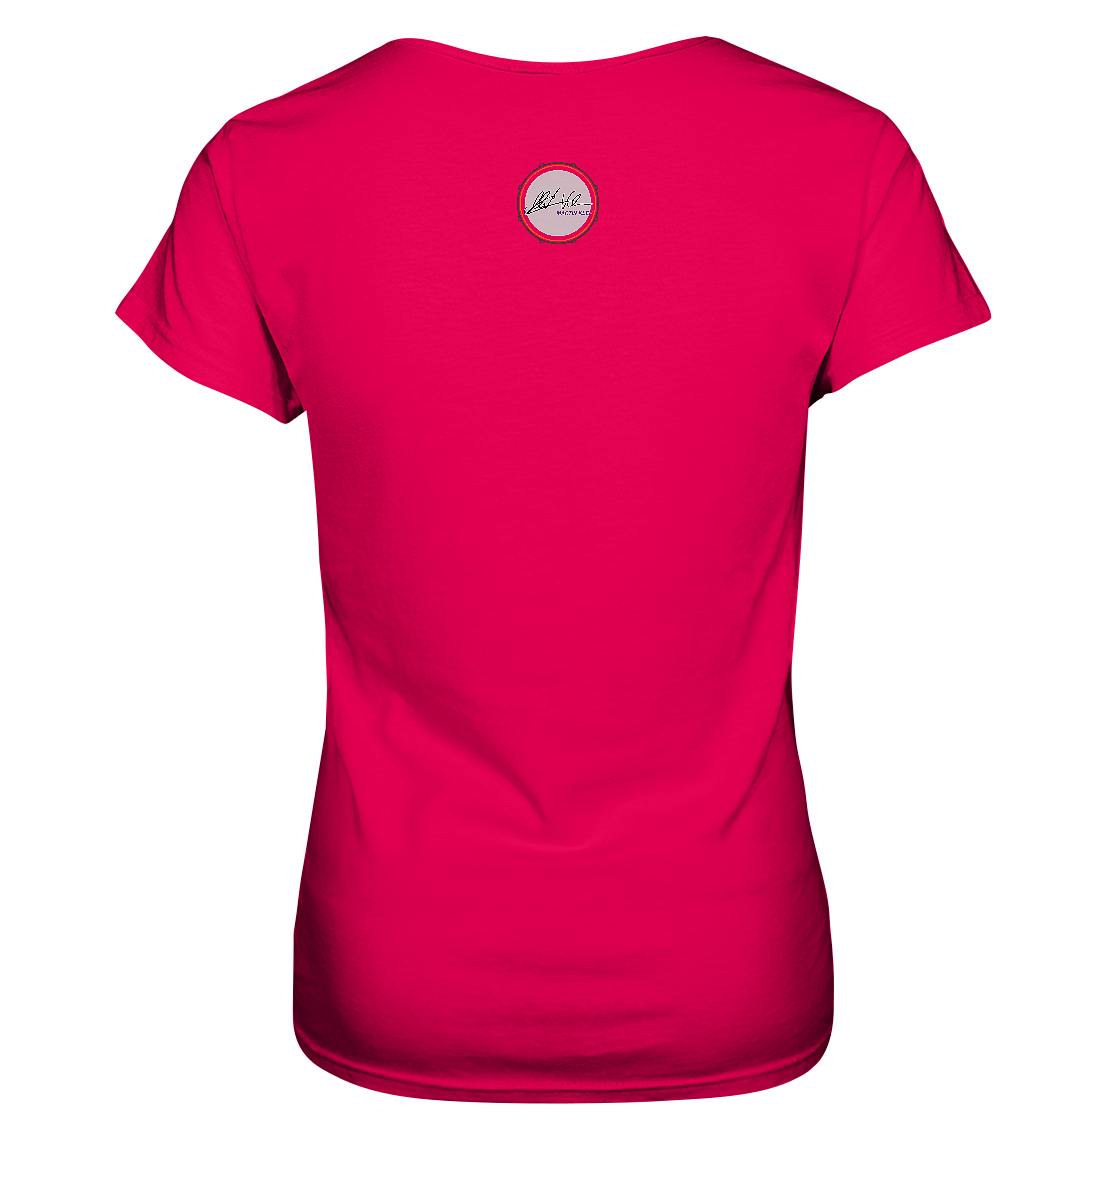 founder v2 - ladies shirt | various colors